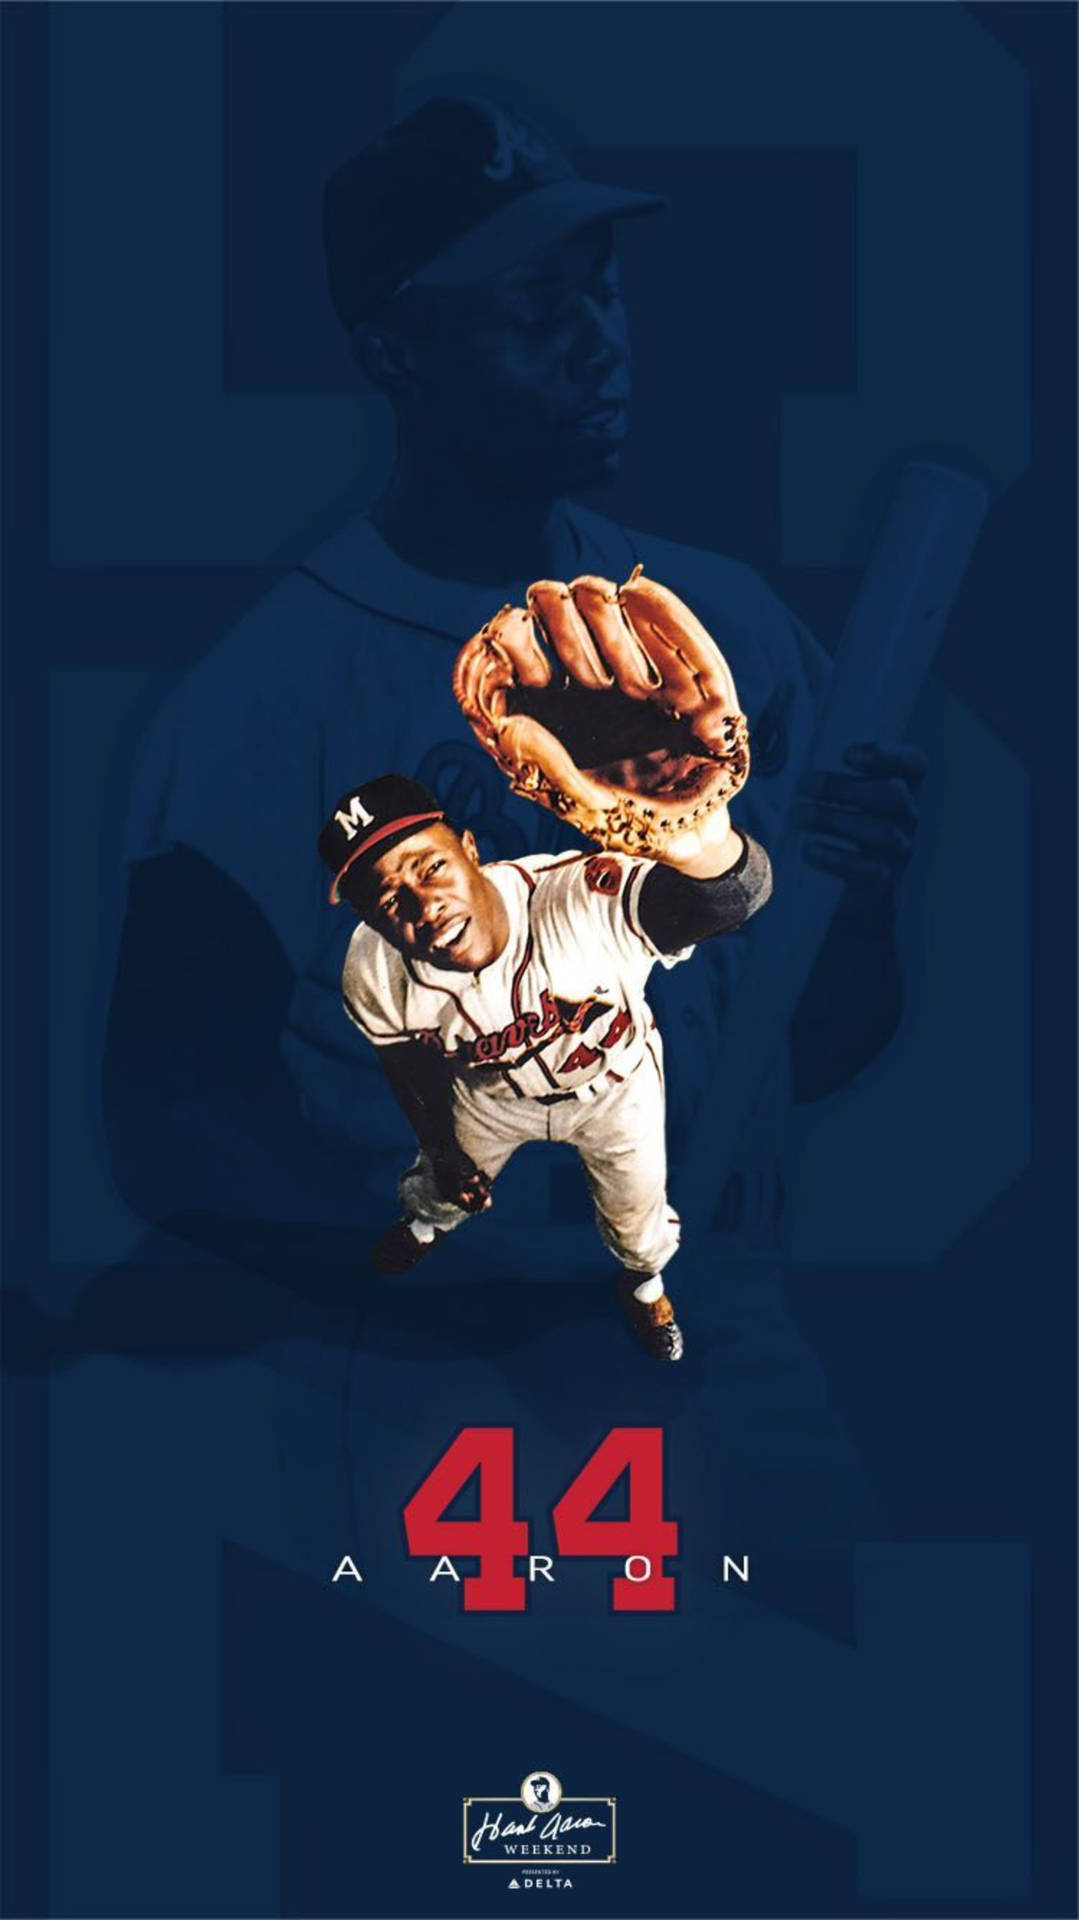 Hankaaron 44 Baseballspieler Wallpaper